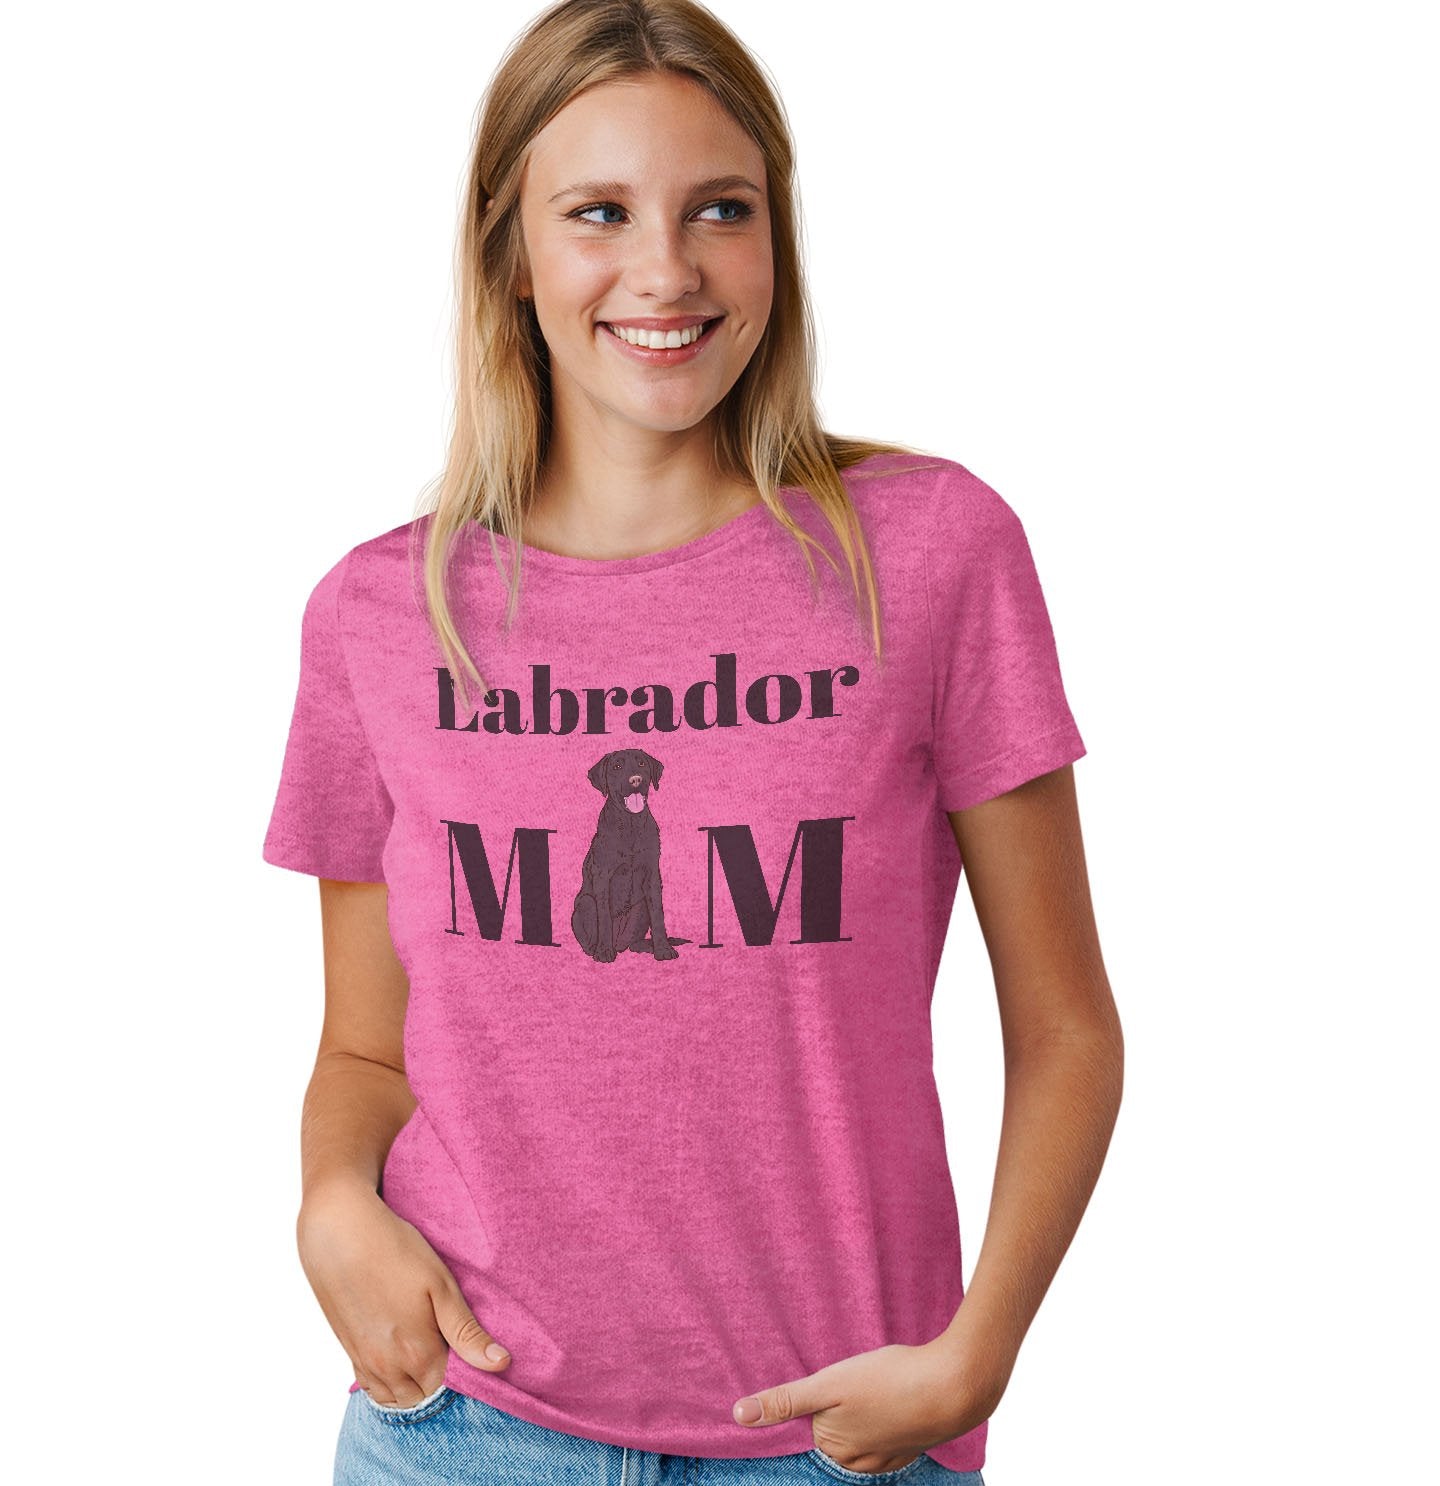 Black Labrador Mom Illustration - Women's Tri-Blend T-Shirt